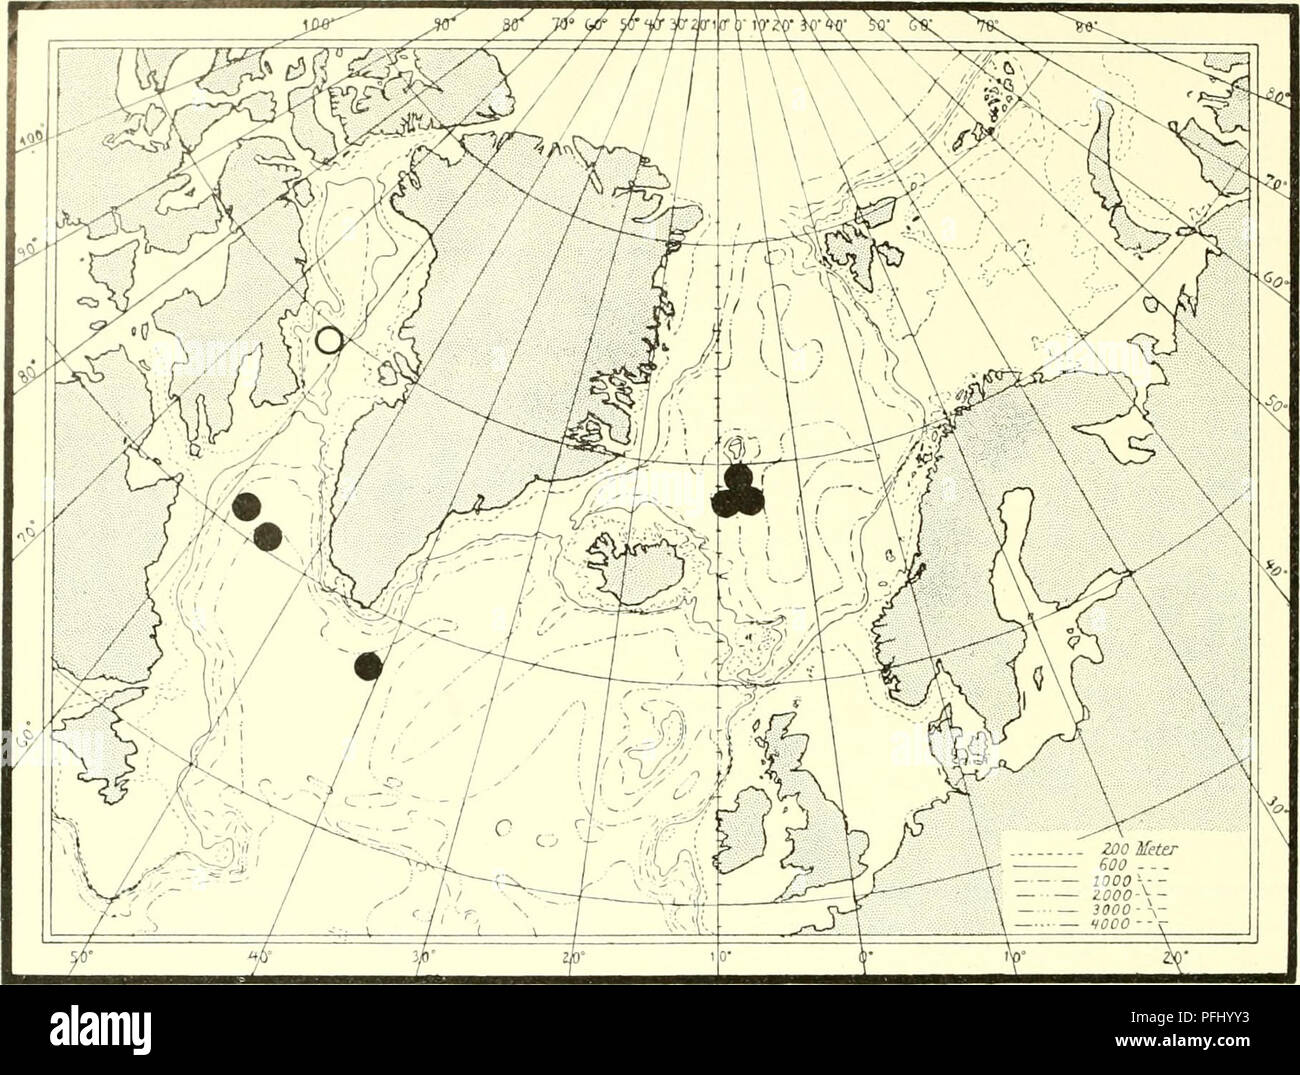 . The Danish Ingolf-expedition. Marine animals -- Arctic regions; Scientific expeditions; Arctic regions. 20 iini.u'i in'i;i(iii&gt;i-:.. Textfig. 18. Kohja hyalina Dan and Kor. % &quot;Ingoli&quot; Stations. Q &quot;Godthaab&quot; Station. Subfamily Peniagoninae Ekman. Genus Peniagone Theel. Peniagone azorica v. Marenzeller. v. Marenzeller 1893: Contribution a' Fetude des Holothuries de I'Atlantique Nord p. 12-13, PI. I, fig. t. PI. II, fig. 5. Grieg 1921: Echinodermata, &quot;Michael Sars&quot; p. 8, fig. 4. Deichmann 1930: Holothurians of the Atlantic Ocean p. 135-137. Localities: 64°34' N Stock Photo